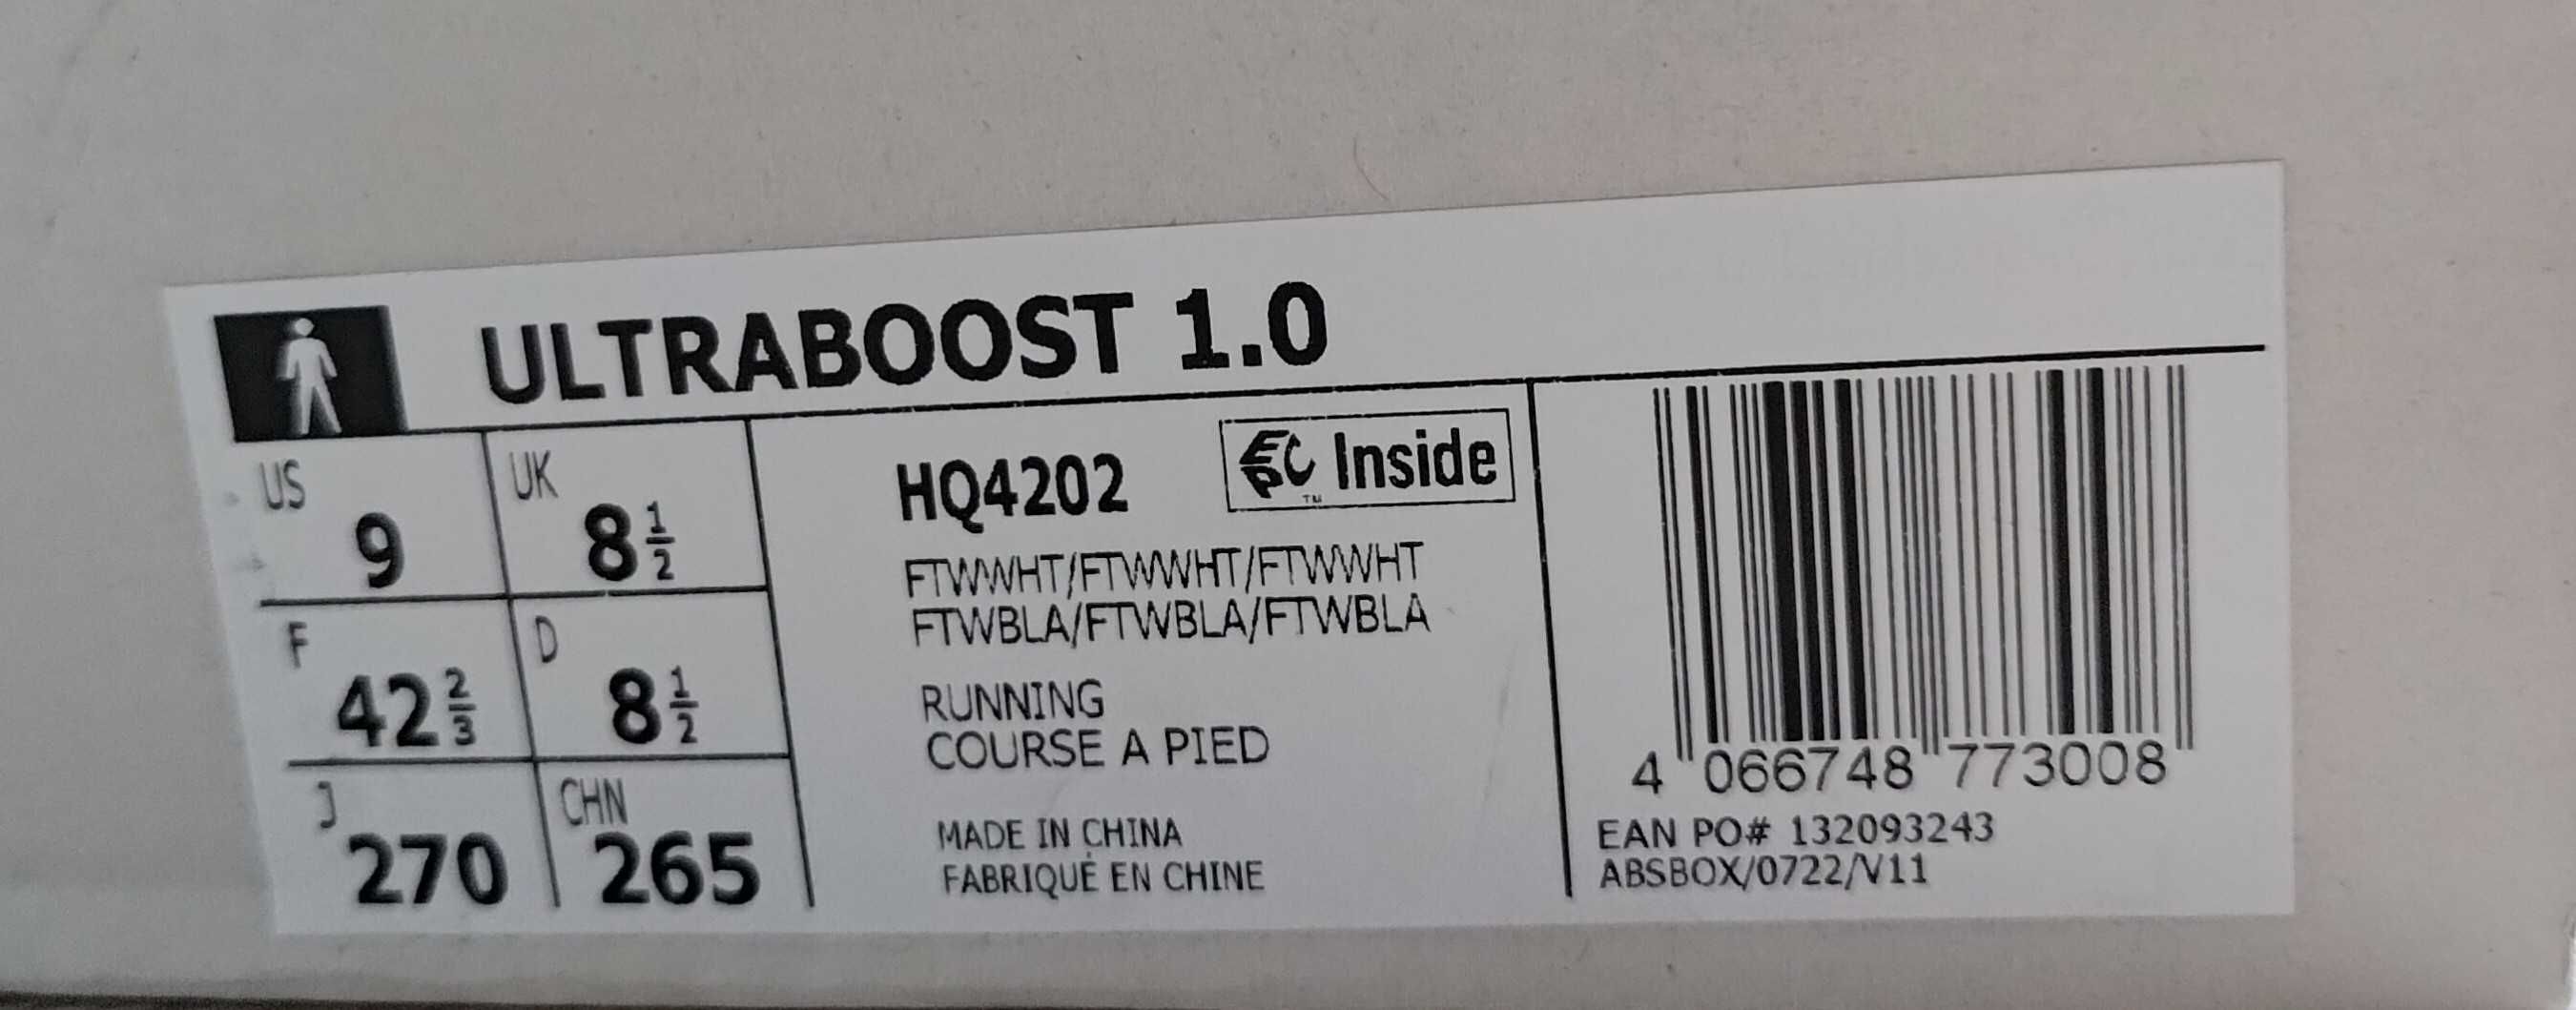 Buty Adidas UltraBoost 1.0 HQ4202